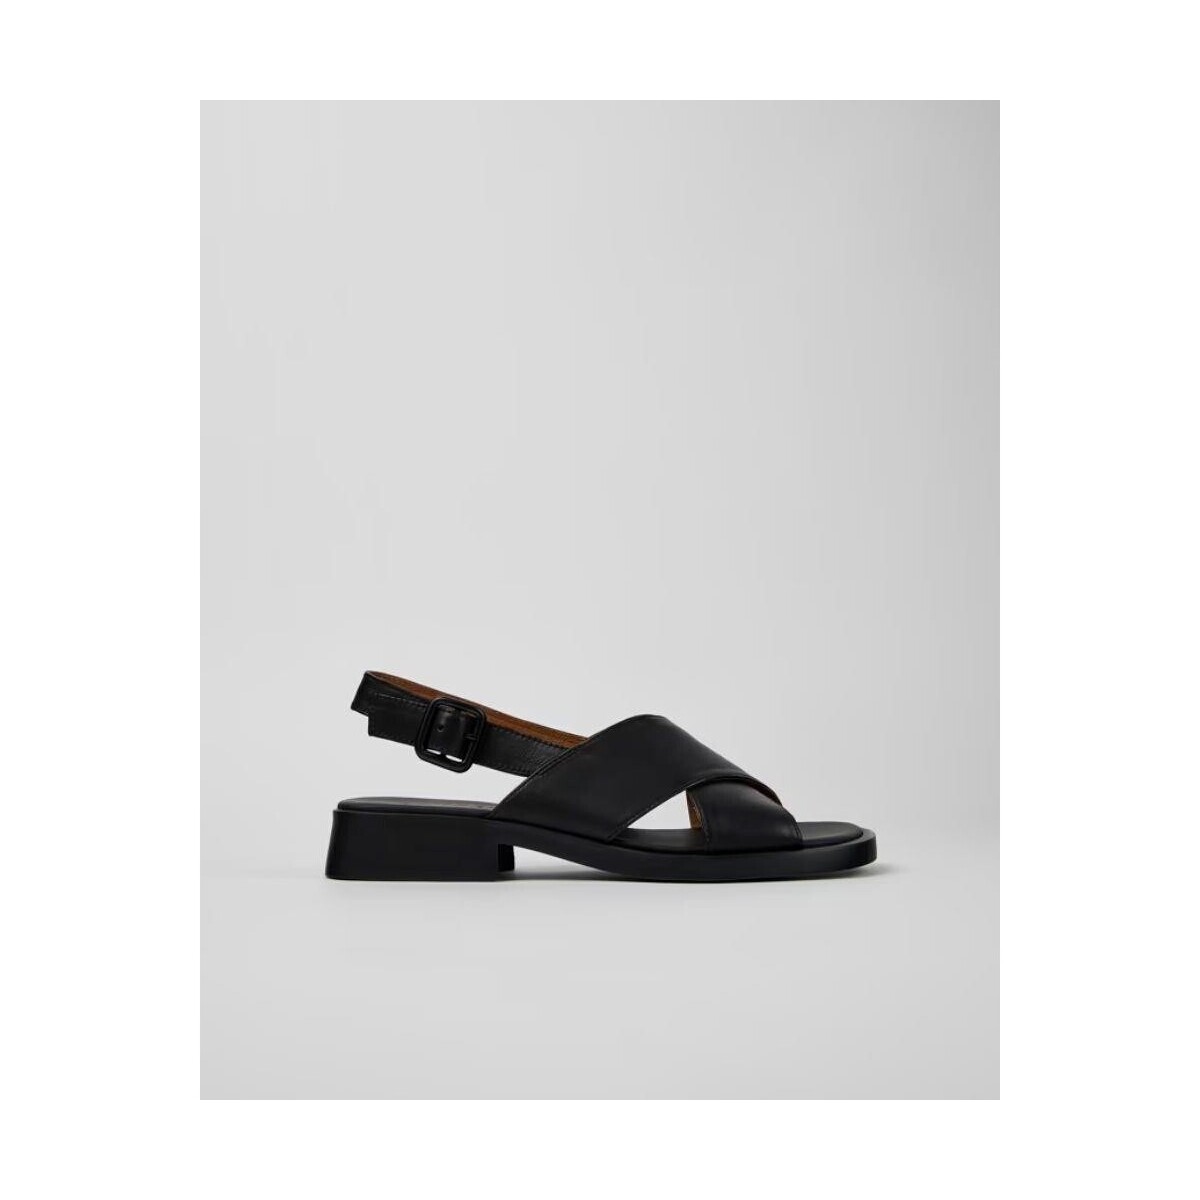 Schoenen Dames Sandalen / Open schoenen Camper K201600 Zwart